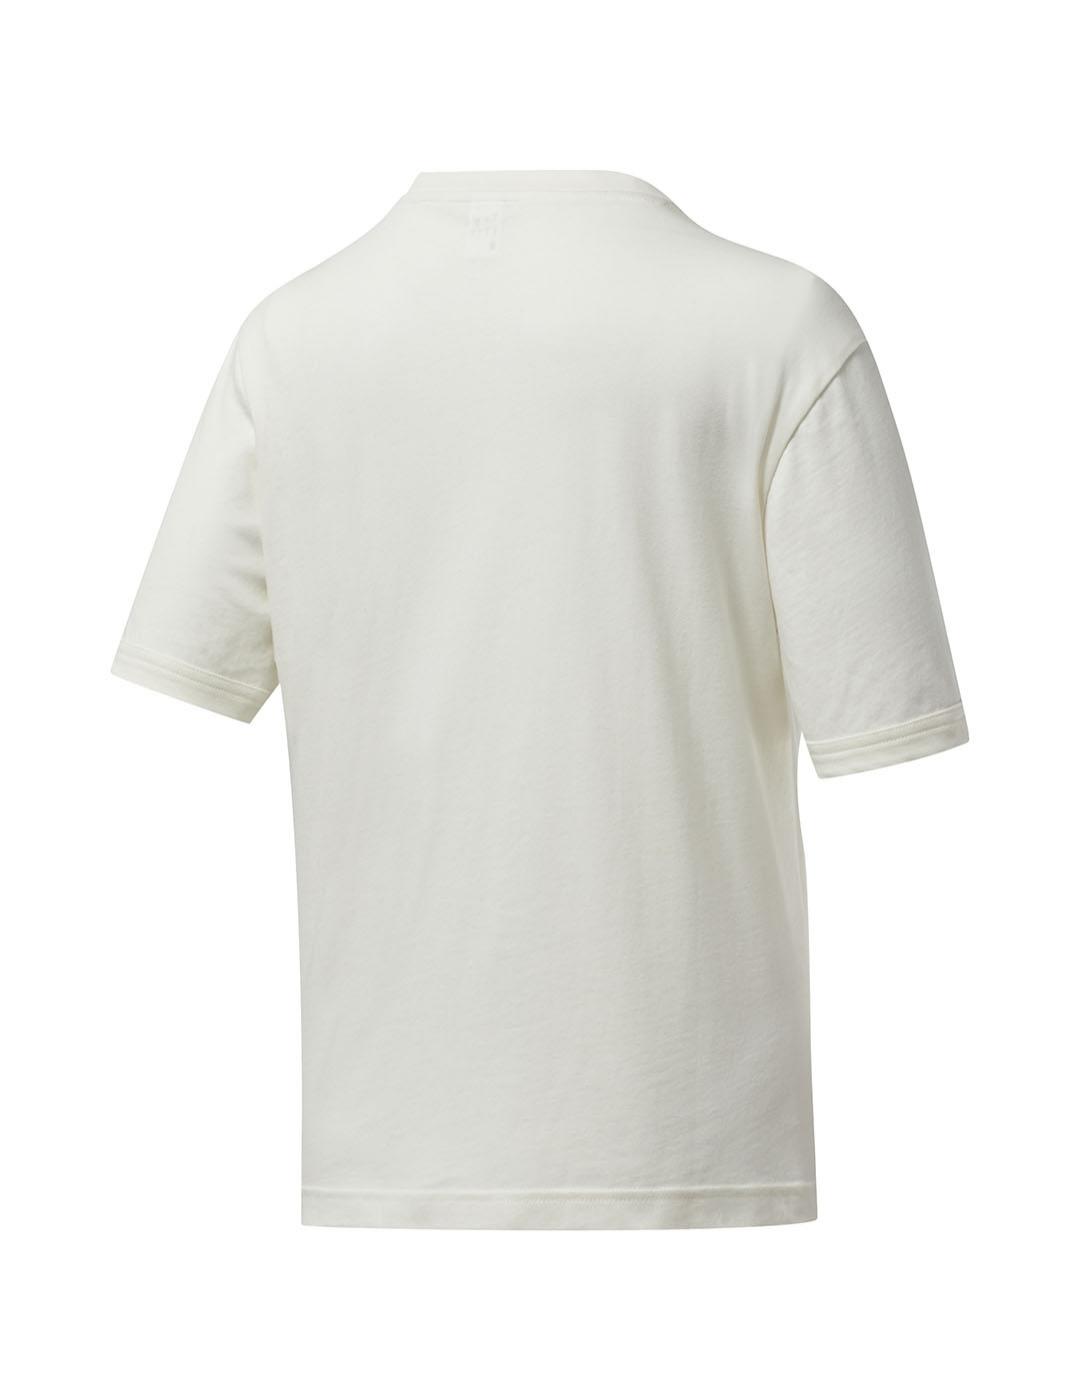 Camiseta Mujer Reebok Classic Linear Blanca